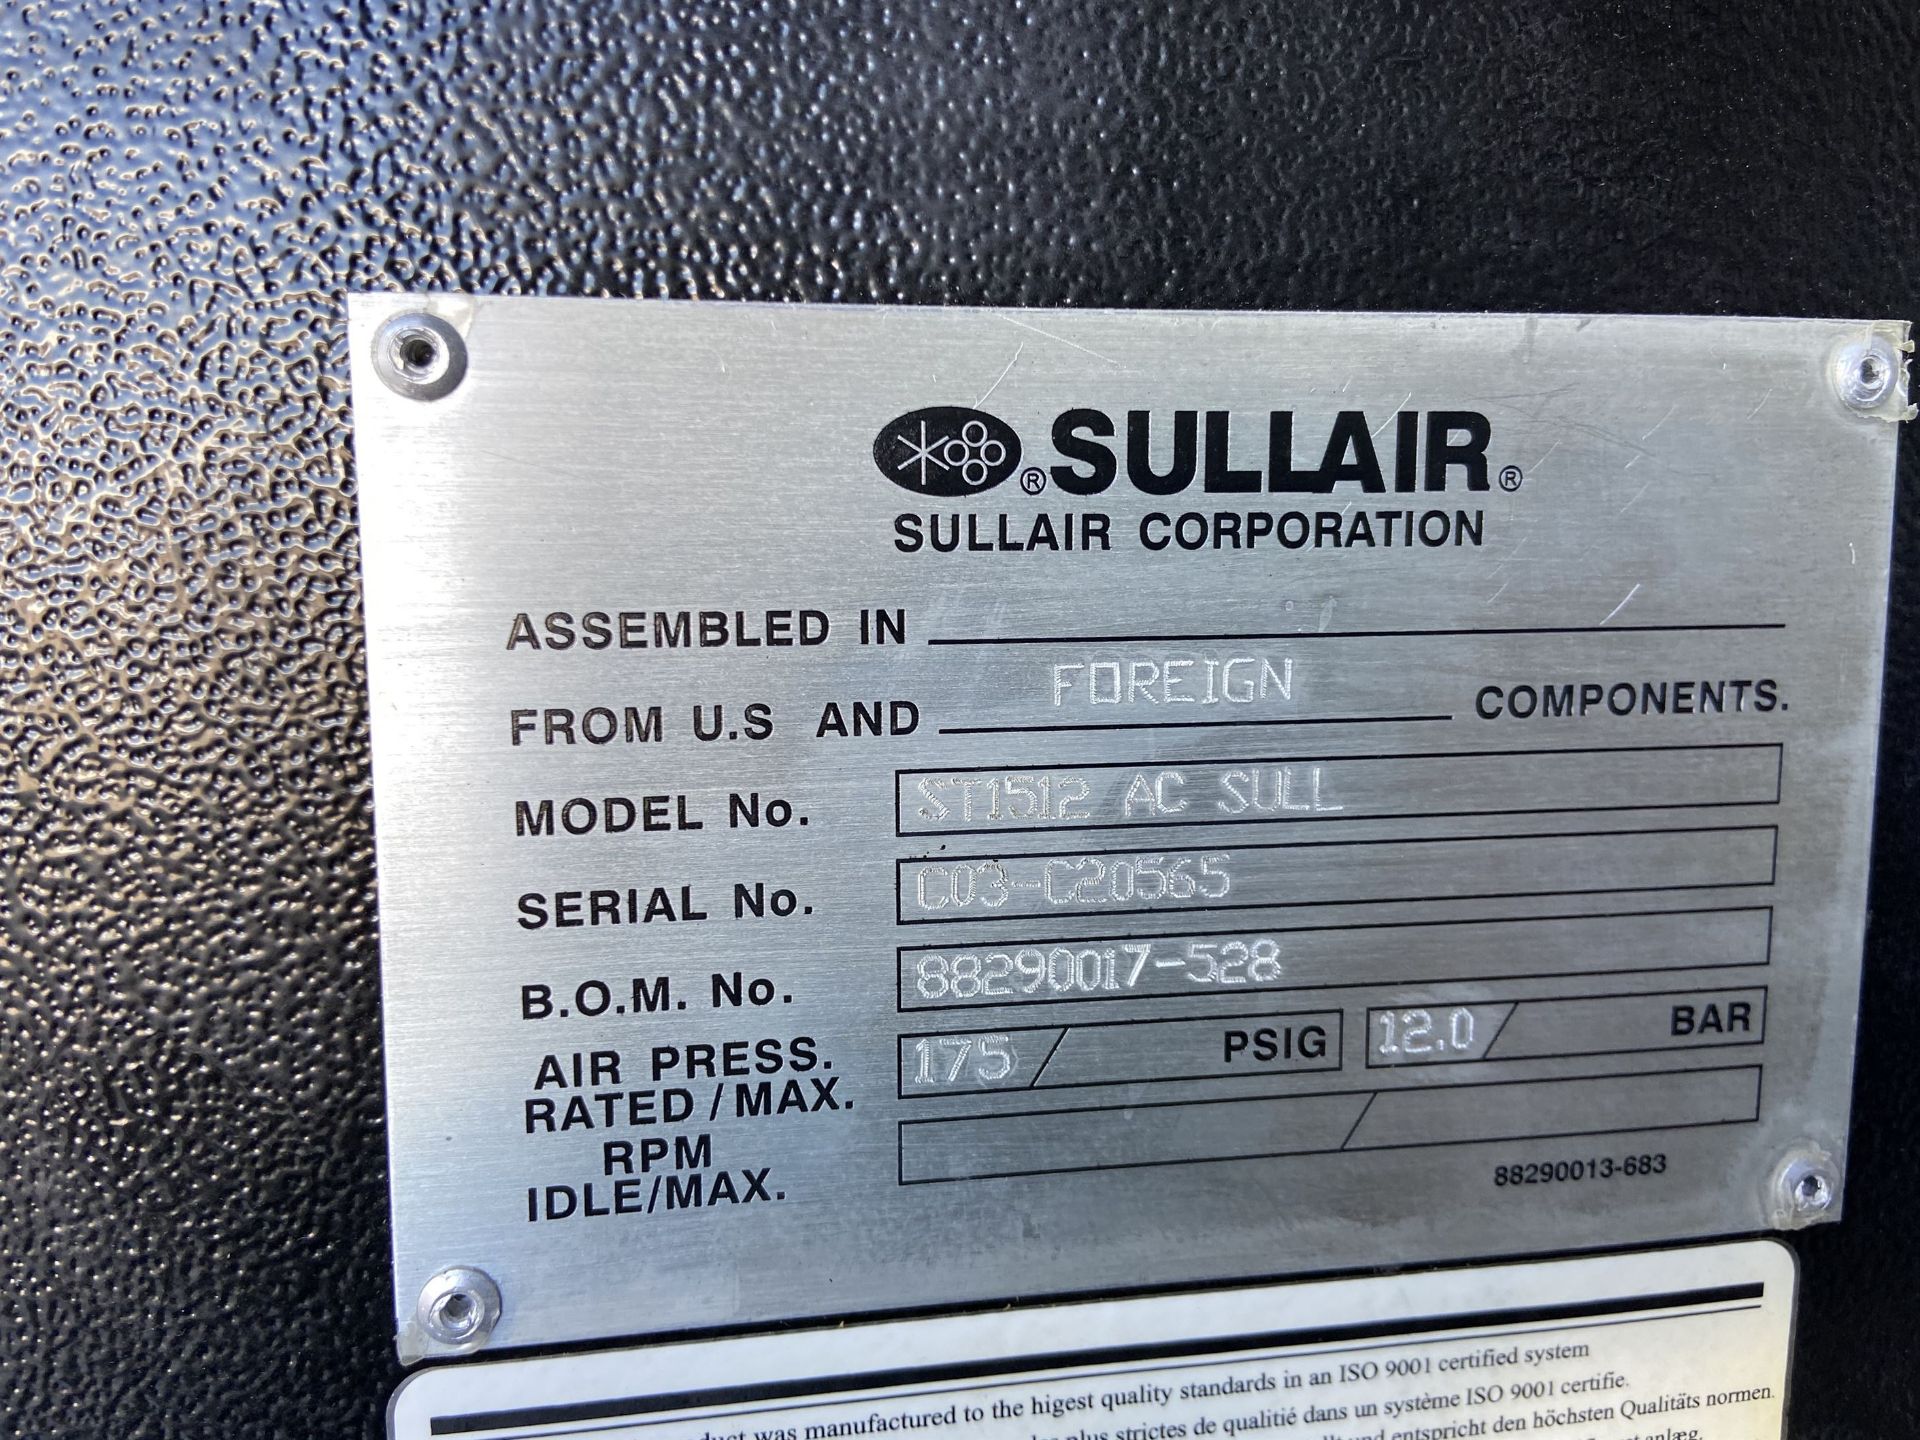 Sullair Shoptek ST1500 Air Compressor Package, s/n C03-C02565, w/ Built-On Dryer - Image 2 of 4